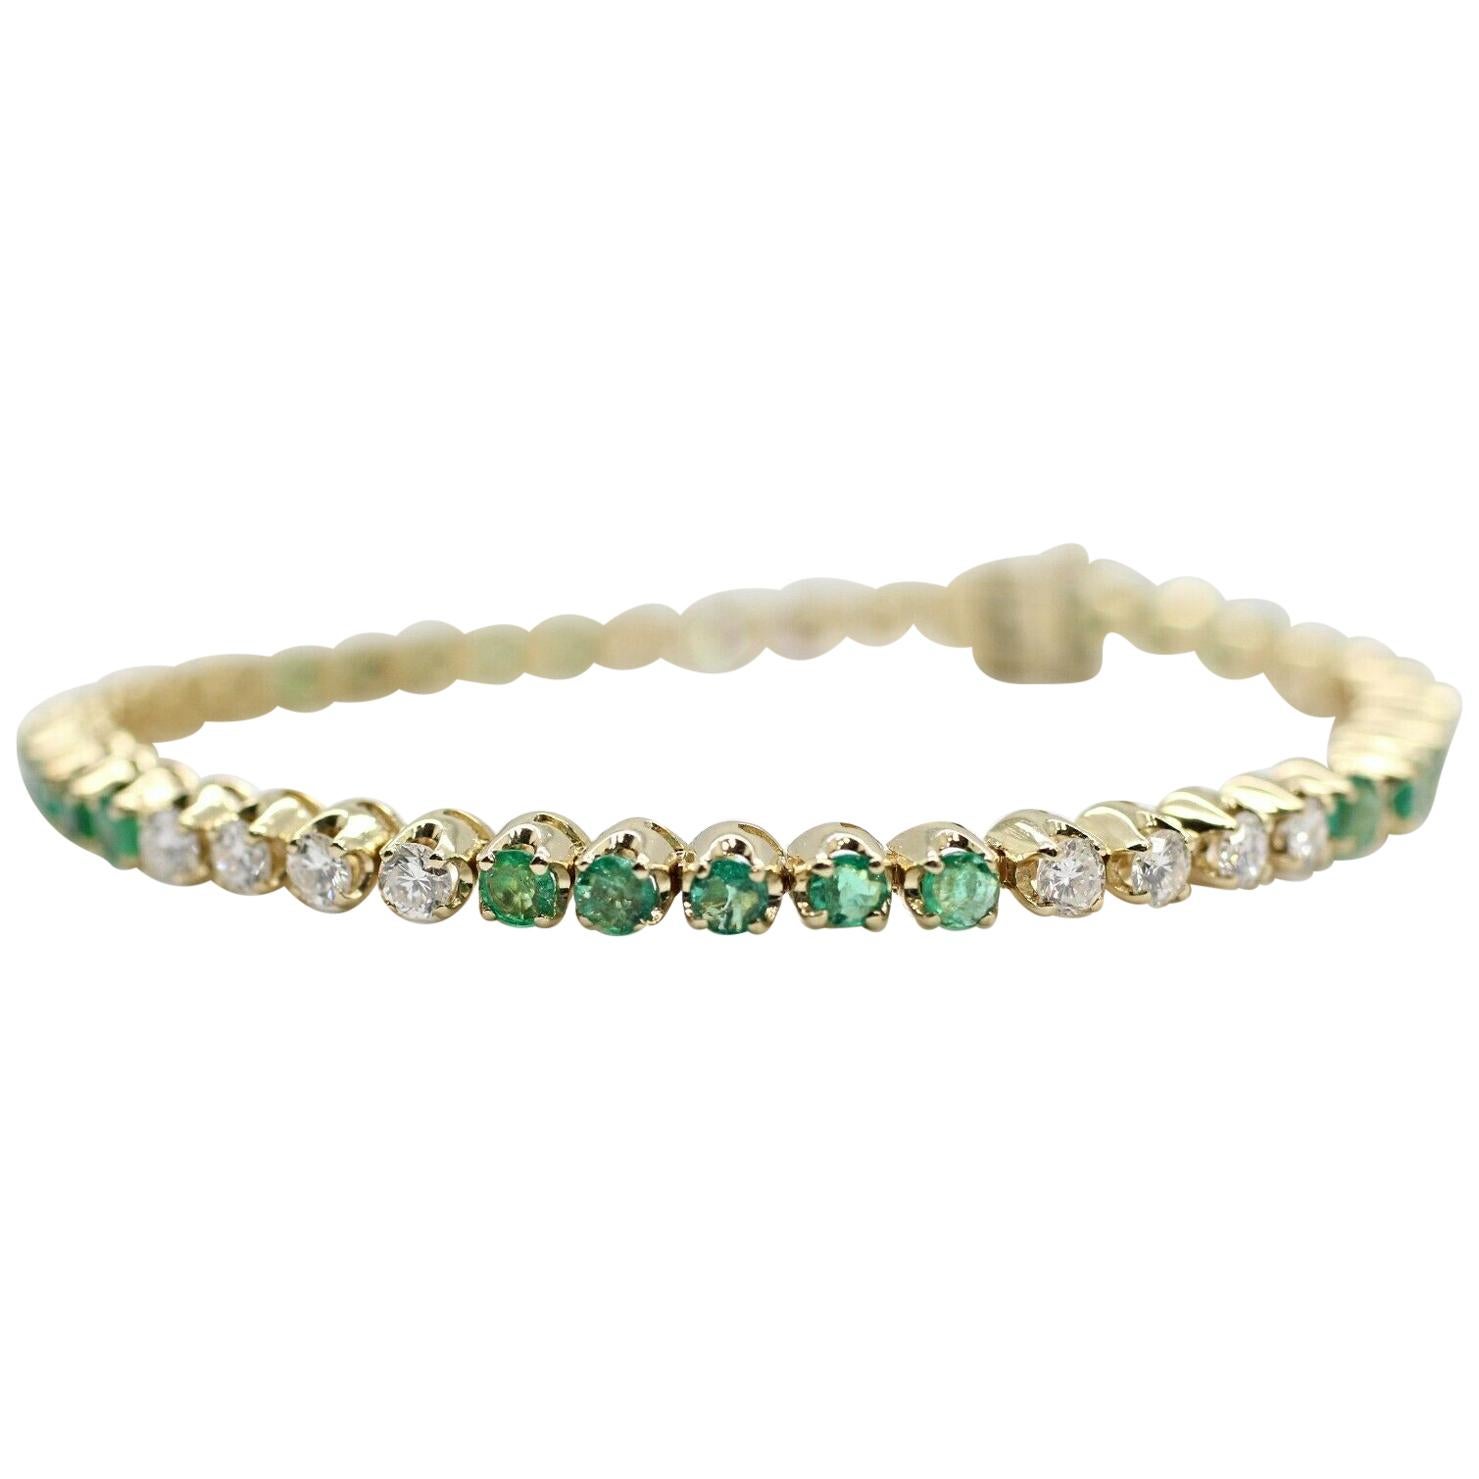 14 Karat Gold Custom Made Bracelet with Very Clean Emeralds and Round Diamonds